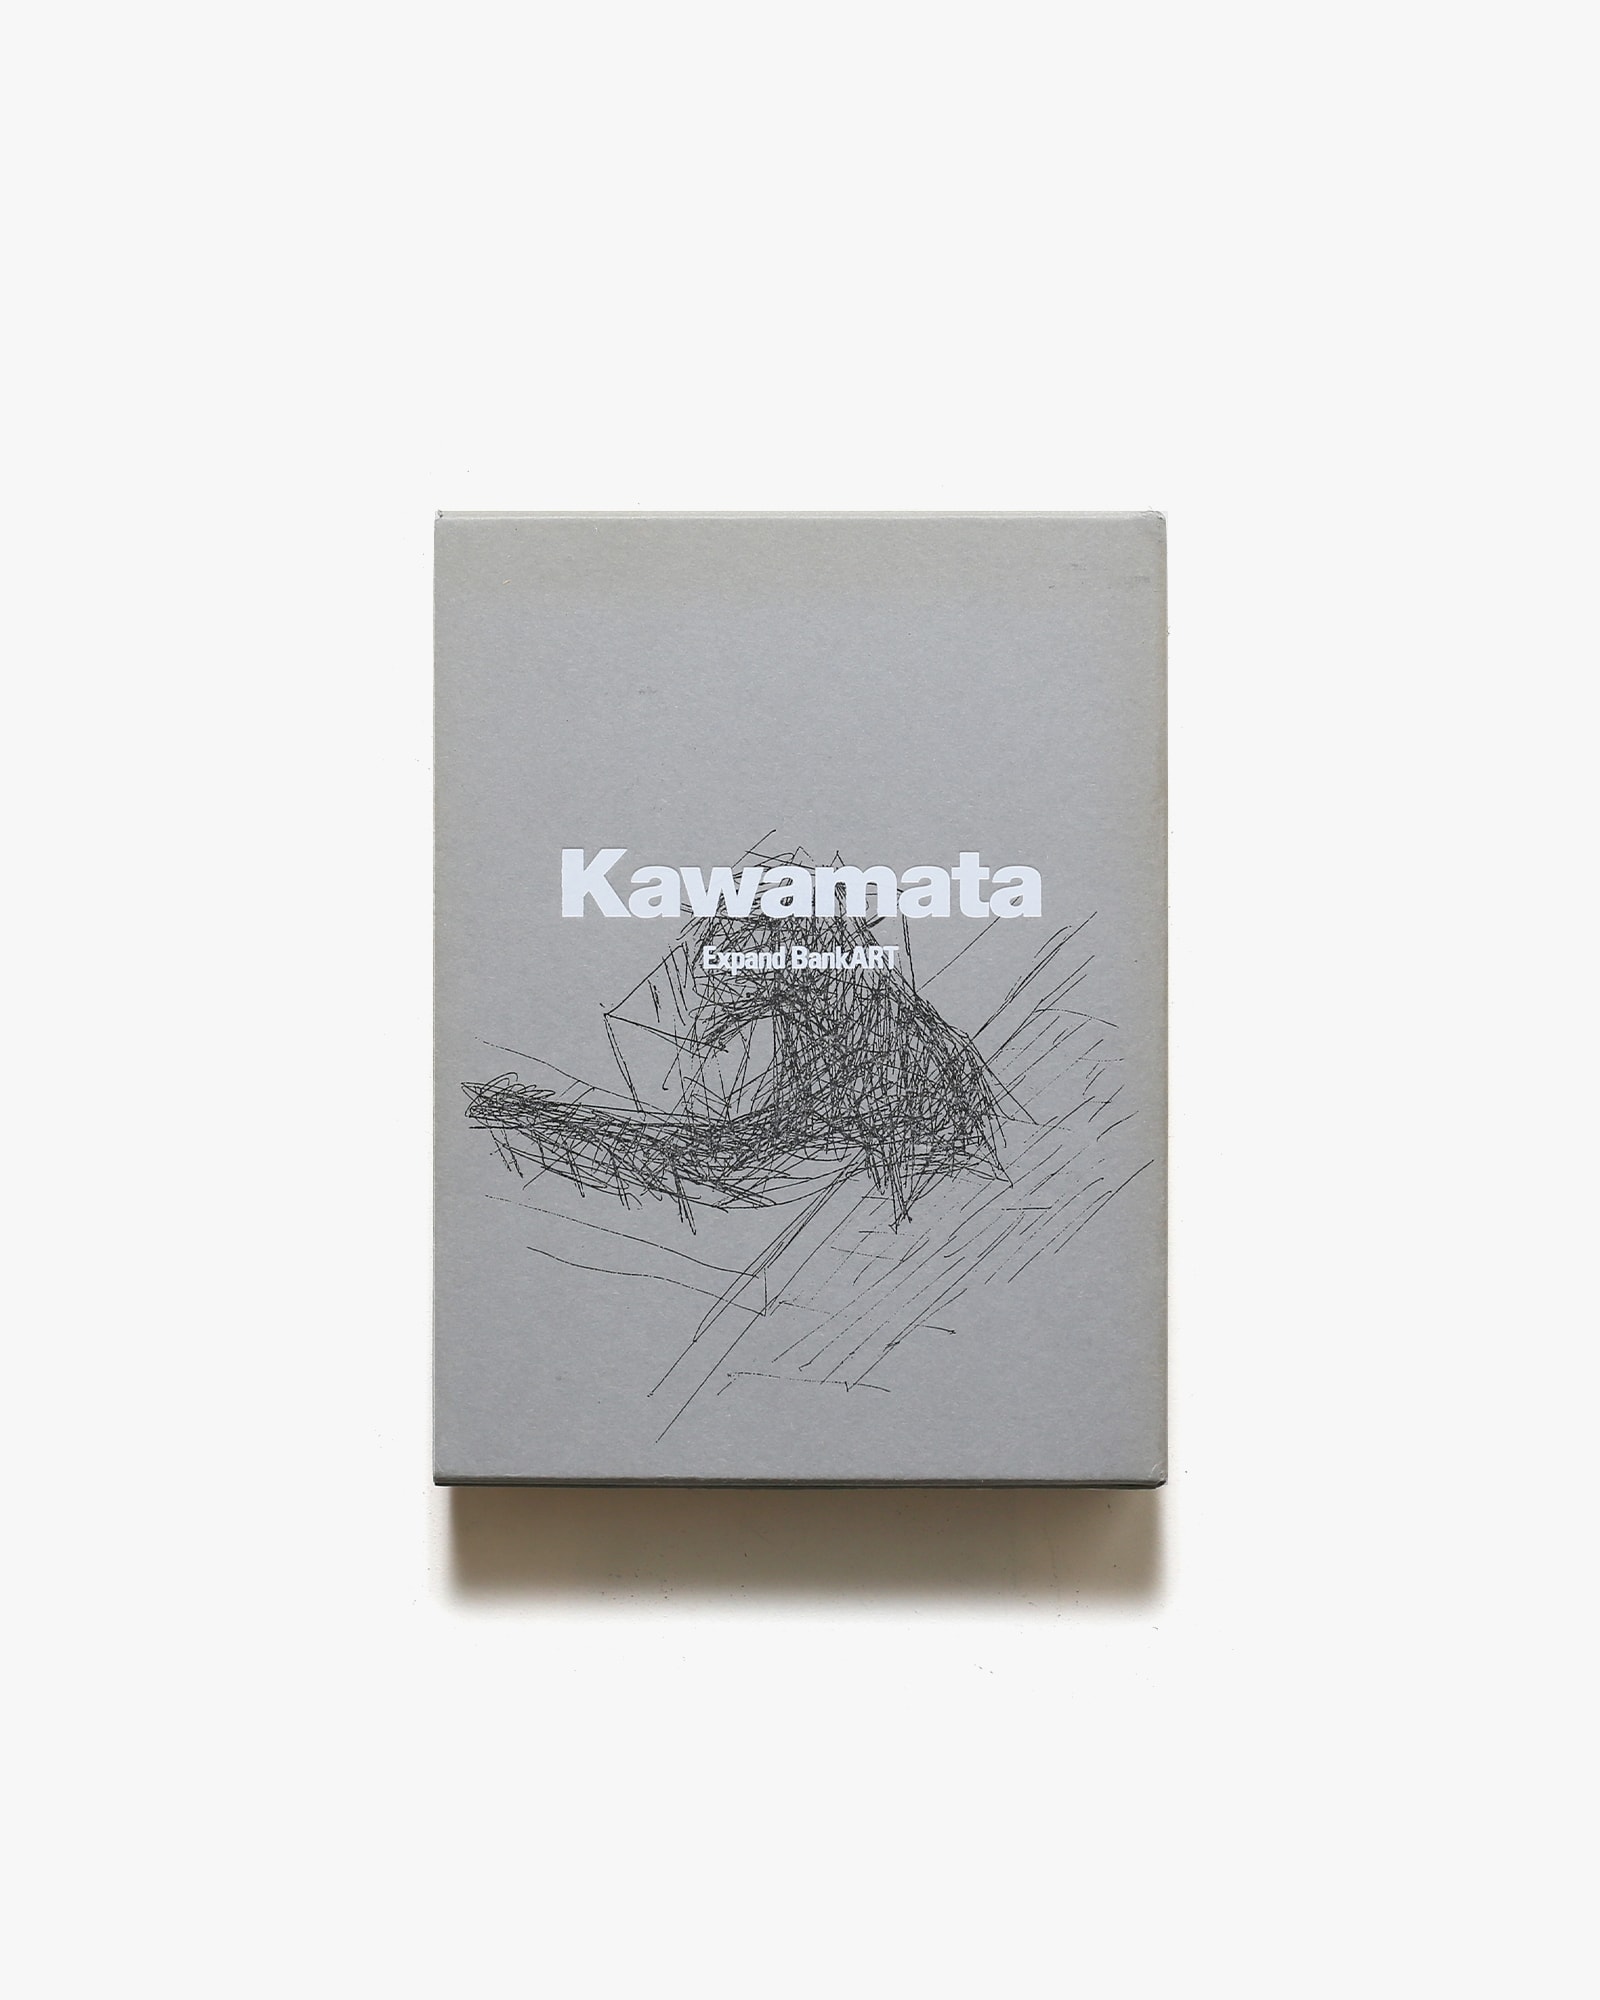 Kawamata Expand BankART | 川俣正 | nostos books ノストスブックス